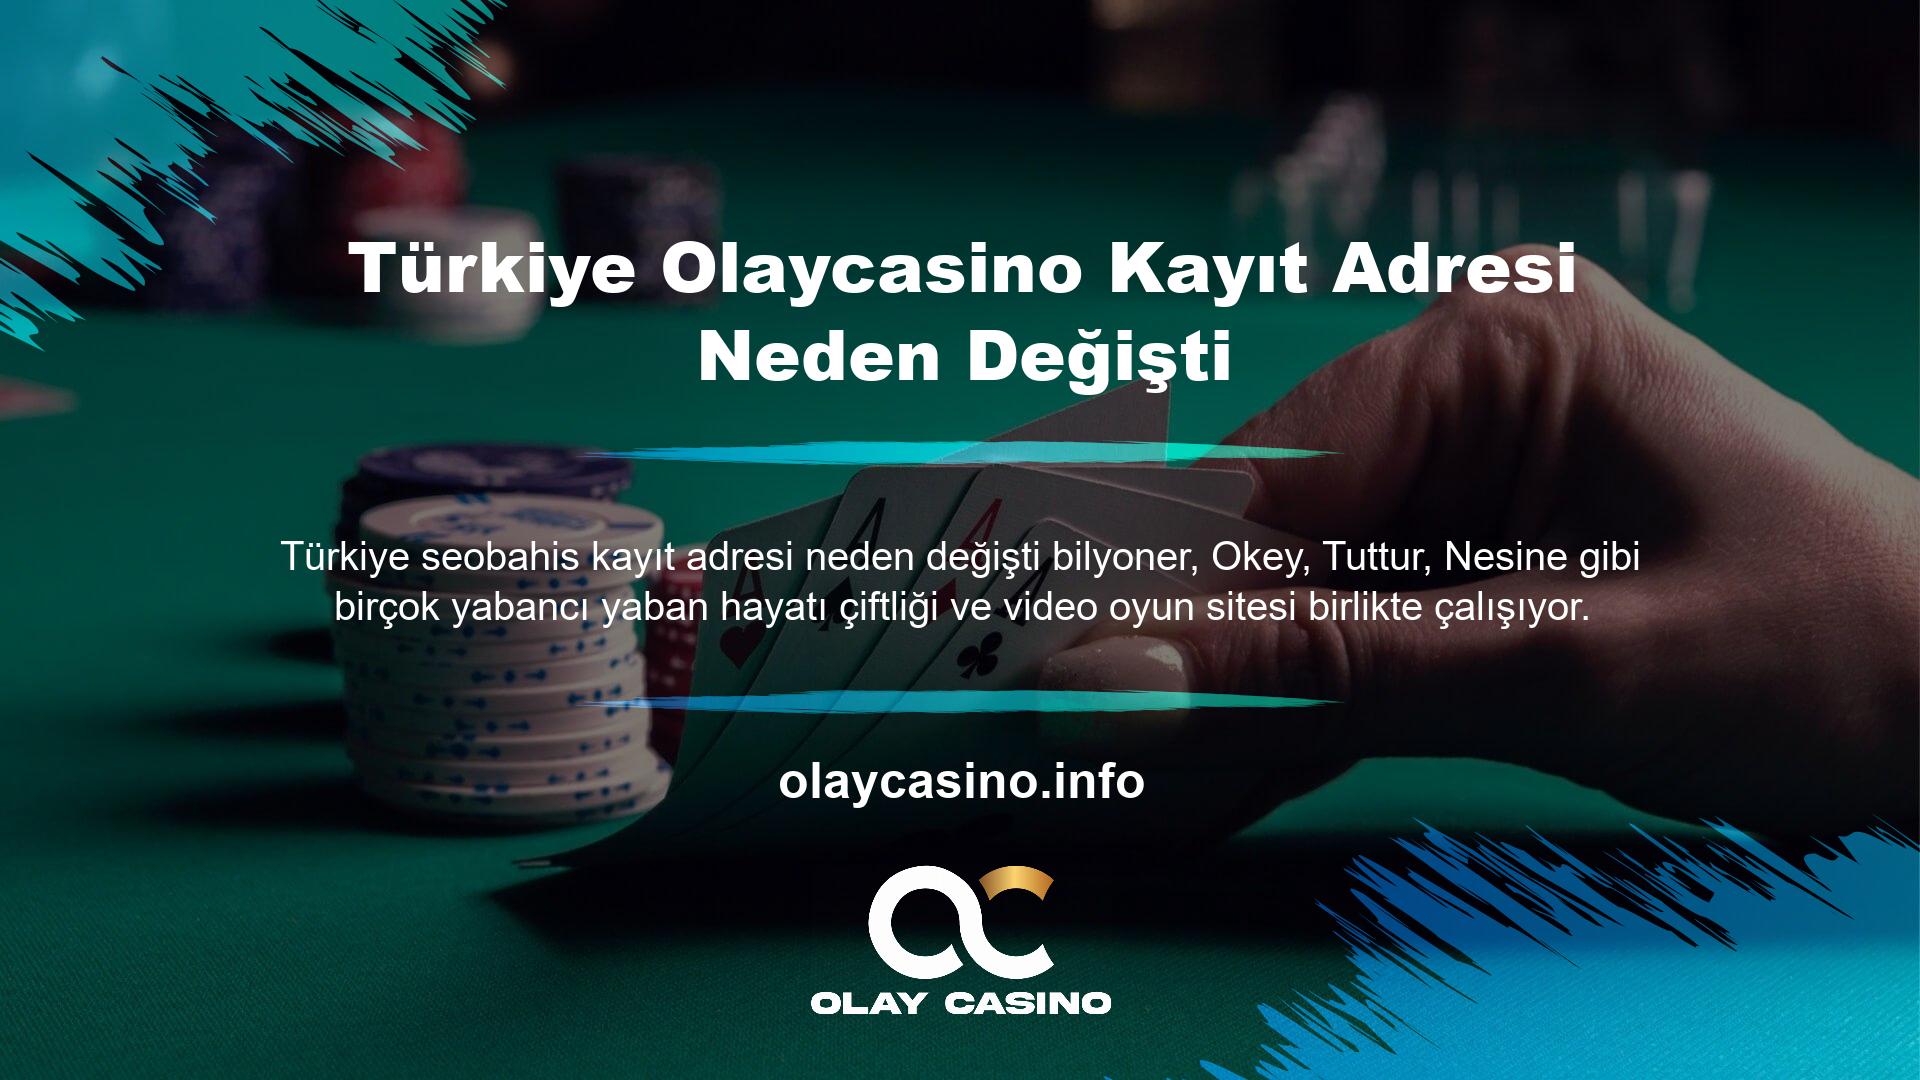 Olaycasino, offshore casino sitelerinden biridir